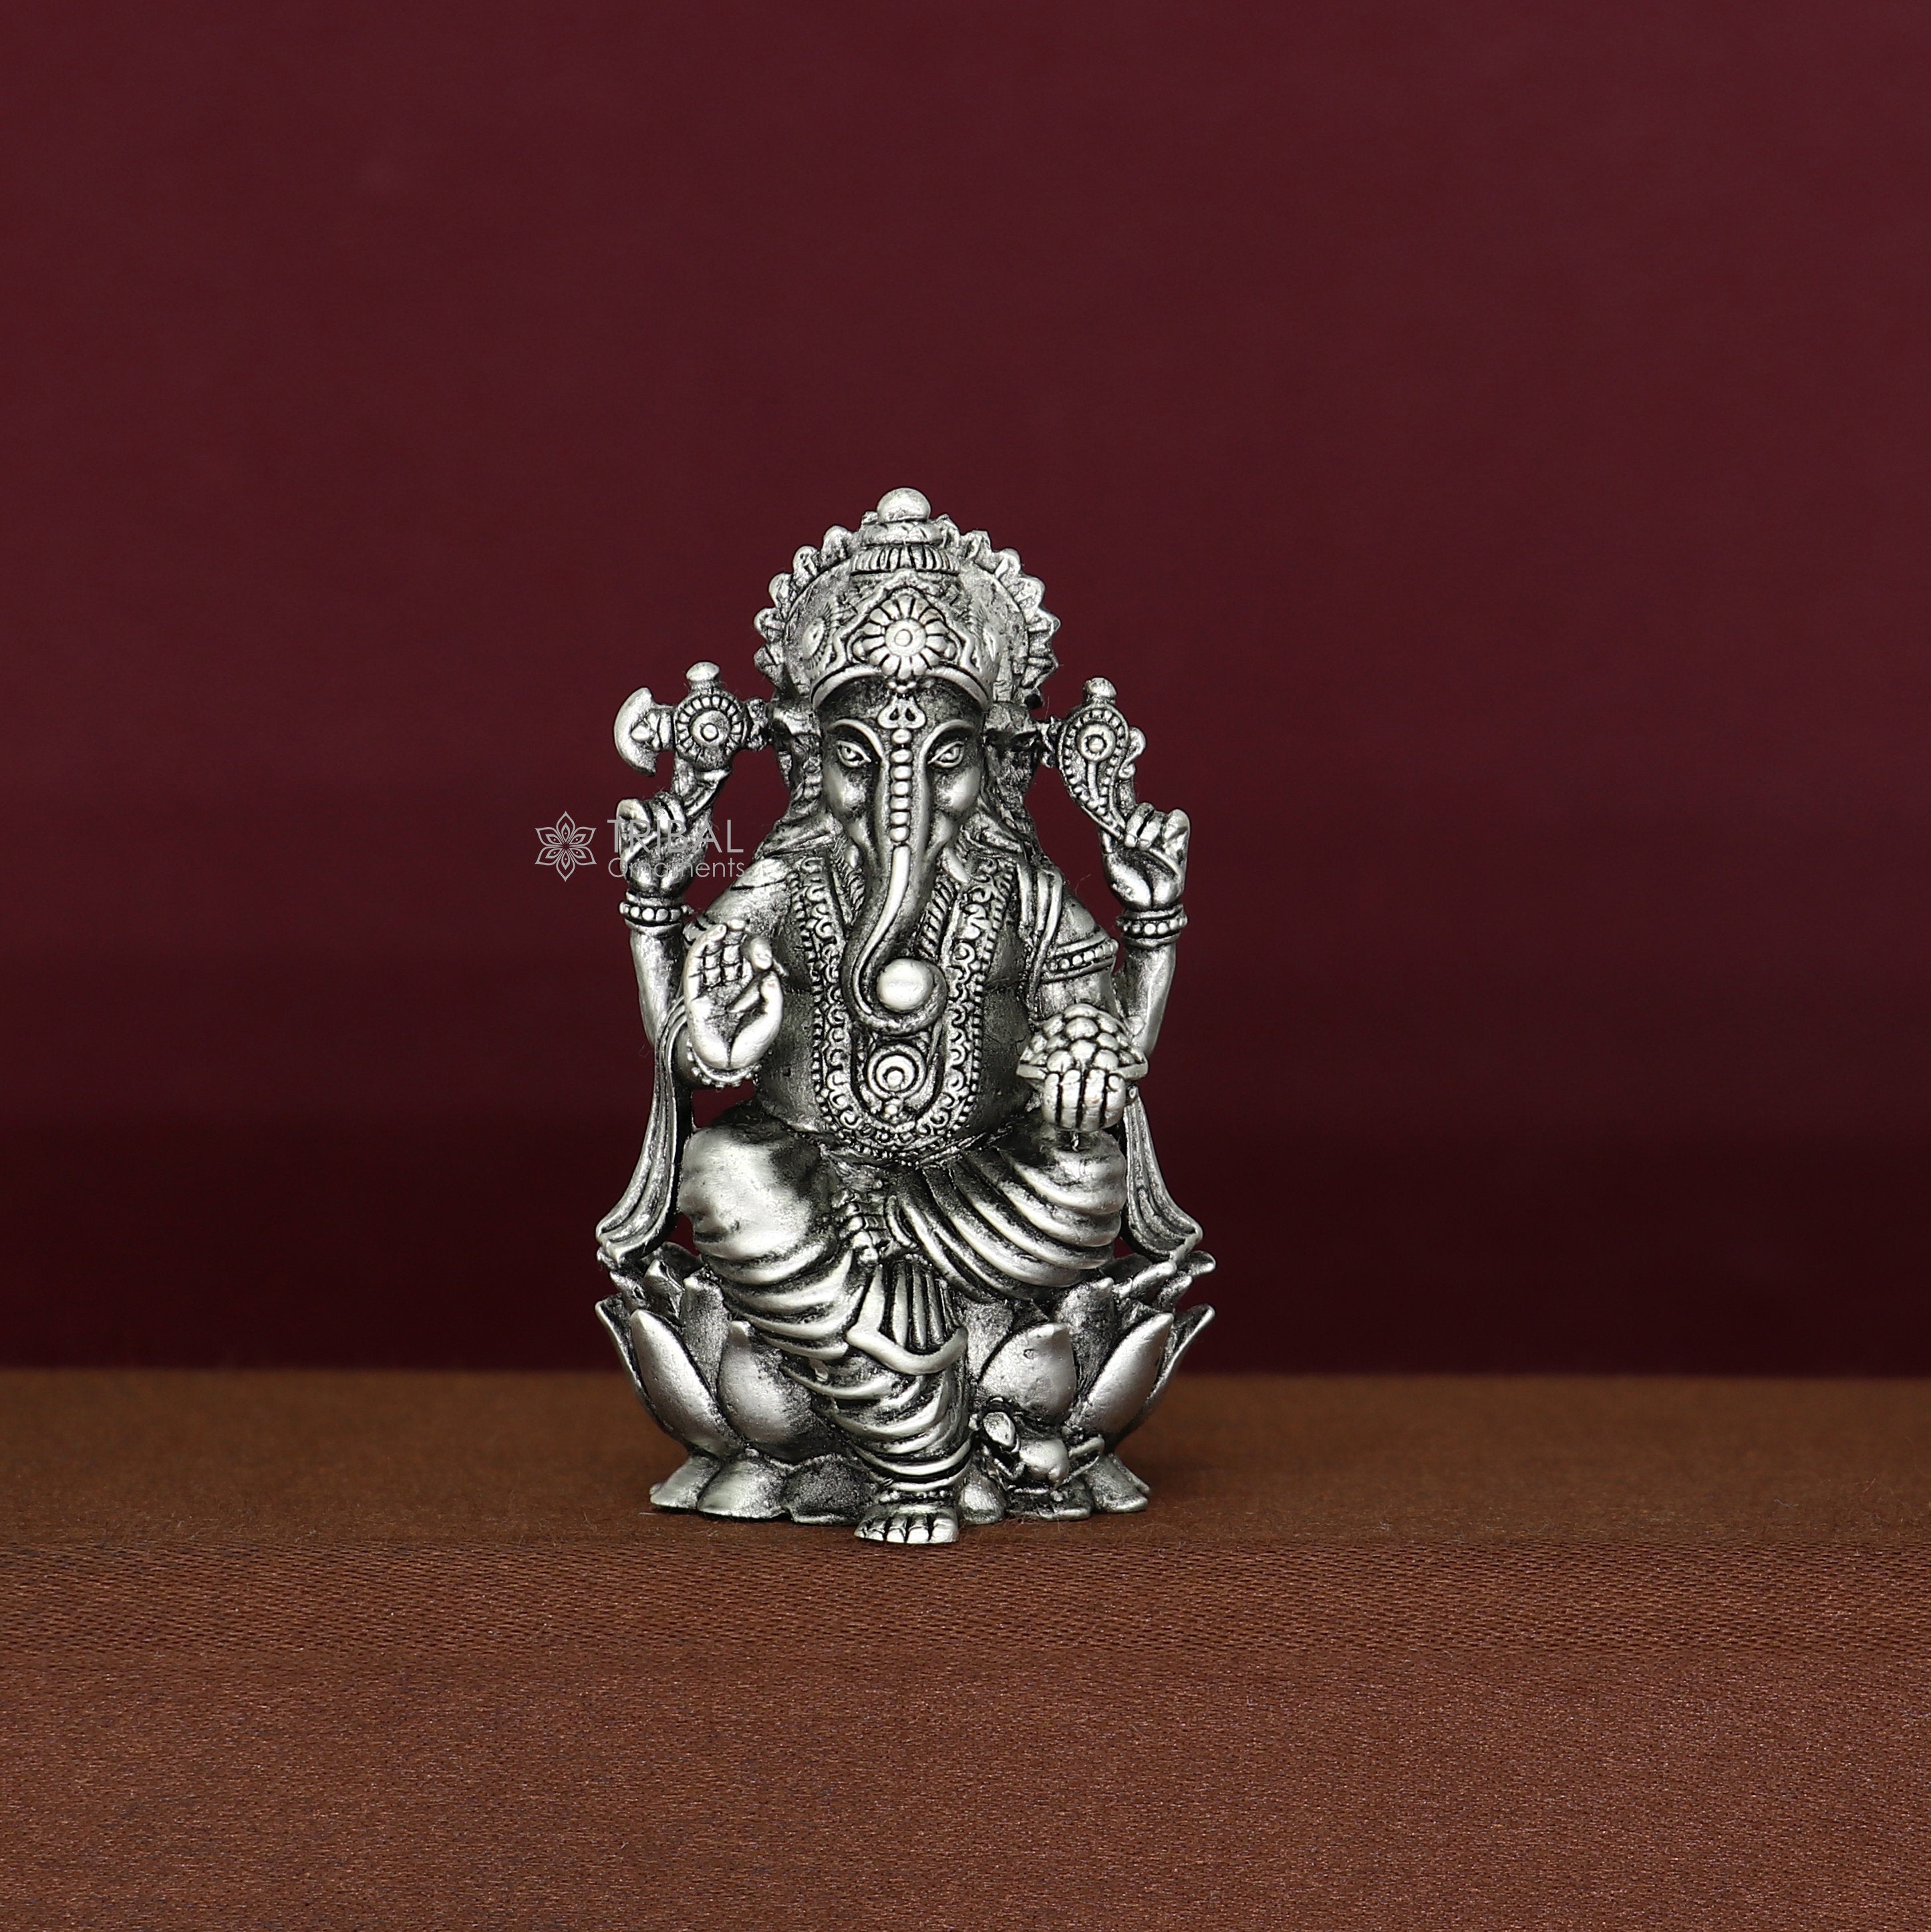 Lord ganesh stone statue home decor figurine sculpture gift mother day  father da | eBay